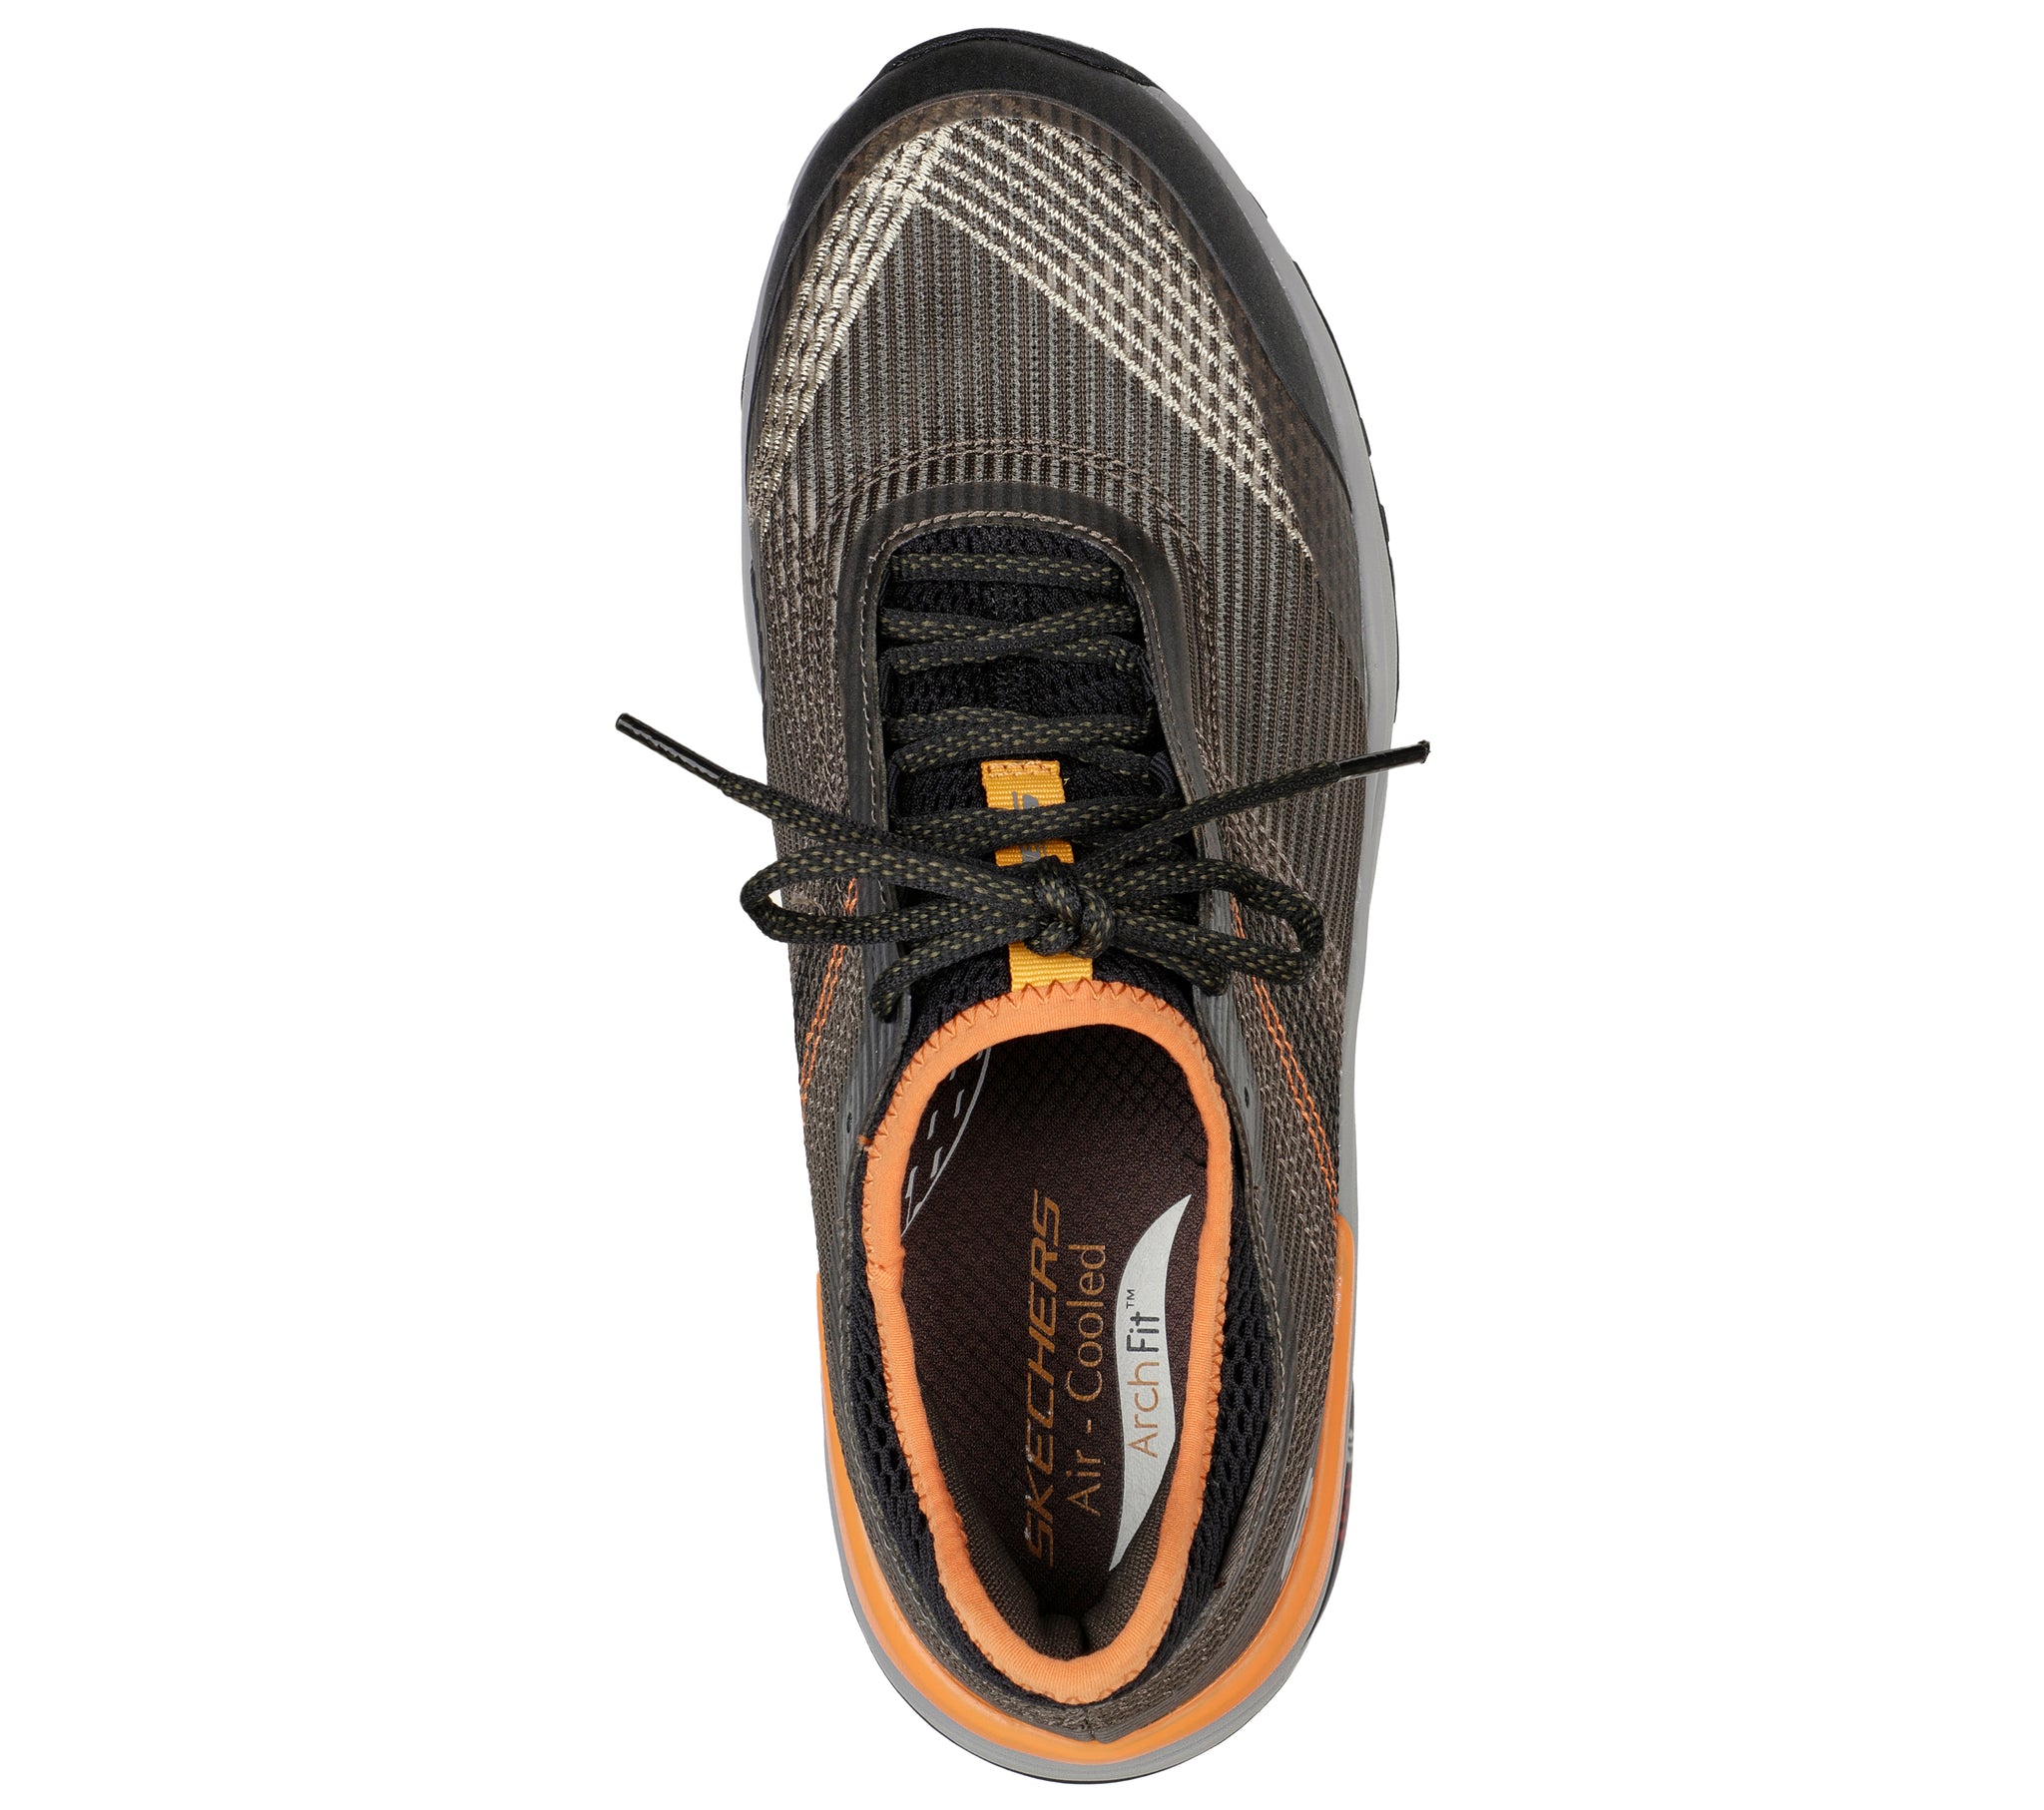 204609 - SKECHERS ARCH FIT DAWSON - MAHONE - Shoess